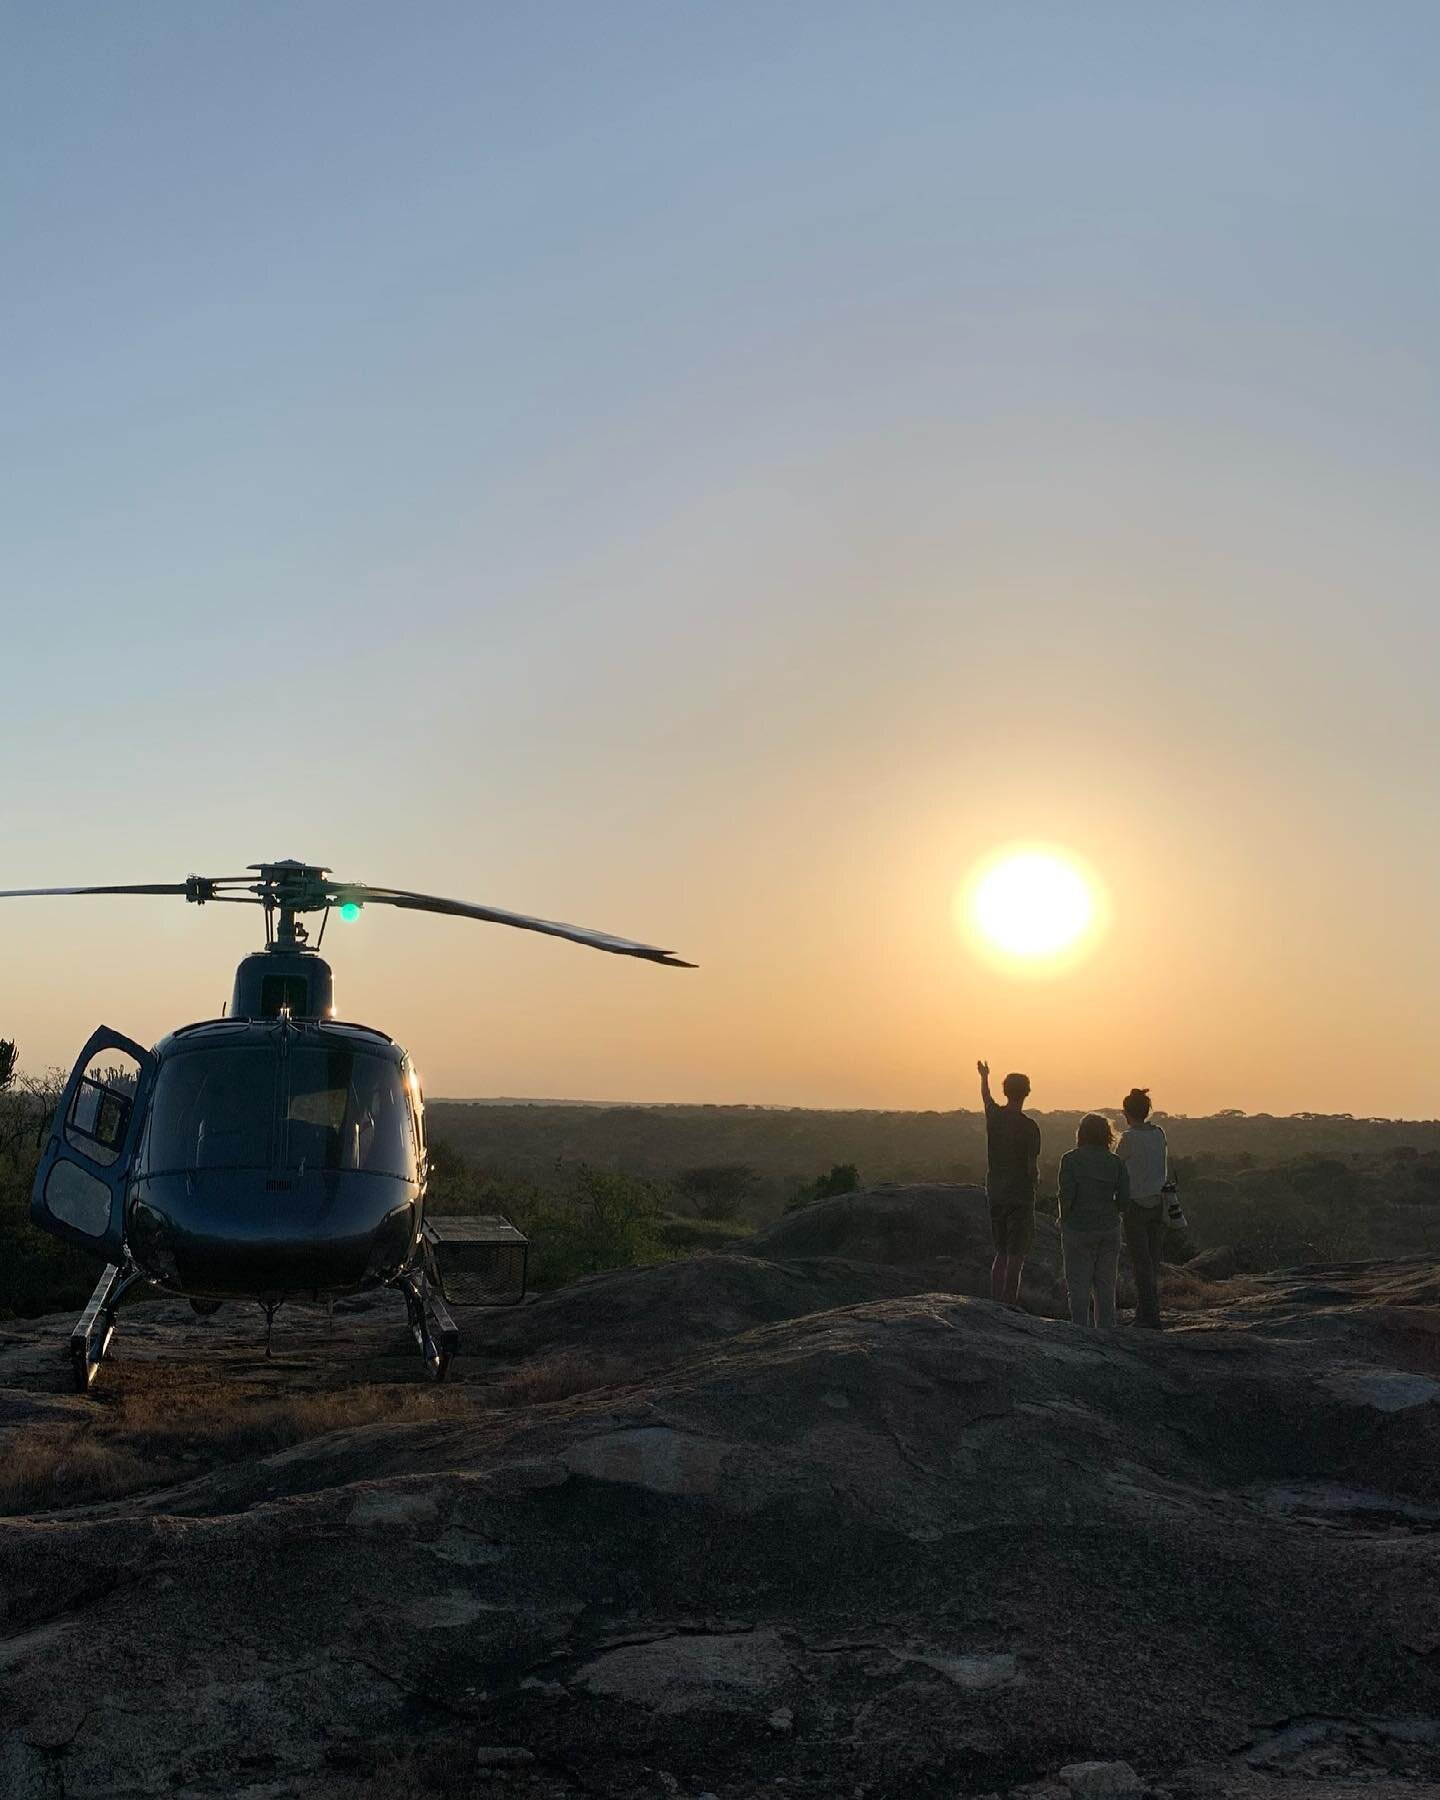 Goodnight from Mwiba Lodge!

#safaritrue #mwiba #serengeti #travel #Safari #africa #helicopter #legendaryexpeditions